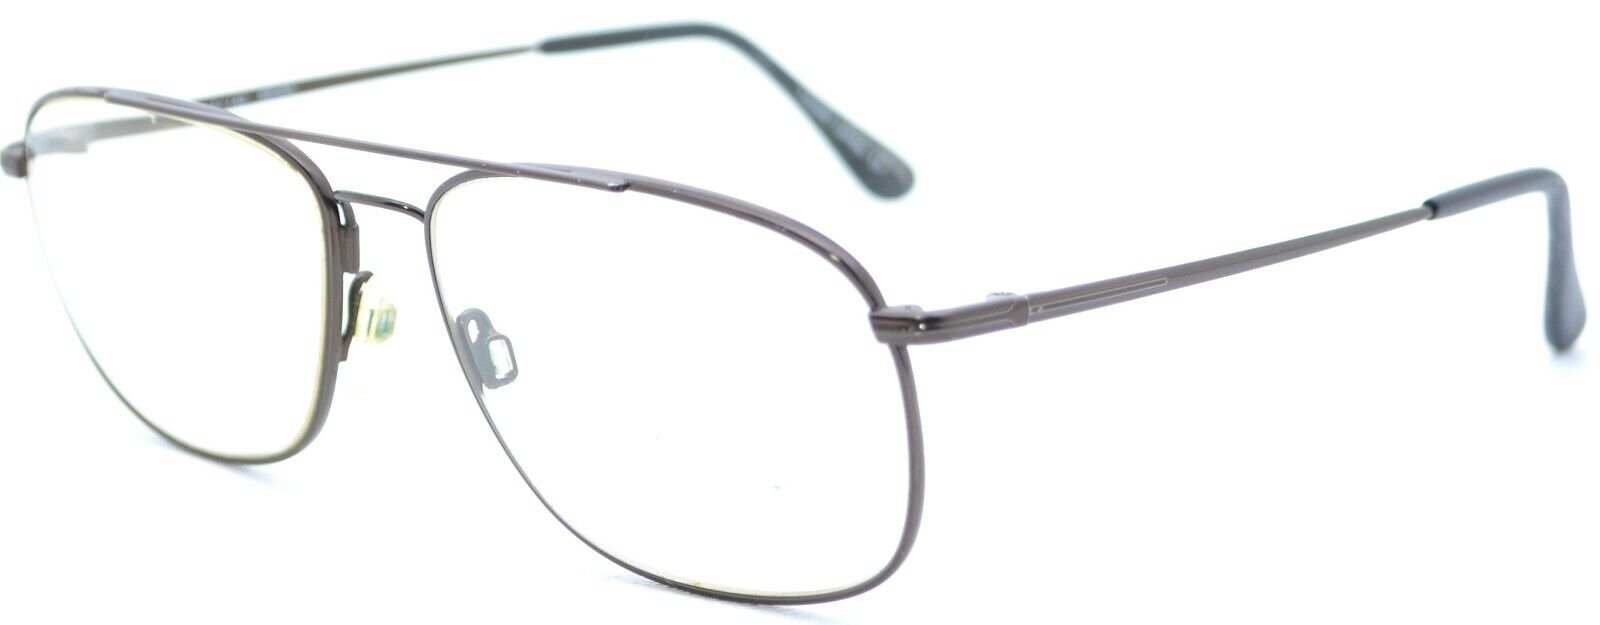 Flexon 44 Marchon Brown Mens Aviator Eyeglasses Glasses Frames 57-16-140 Japan